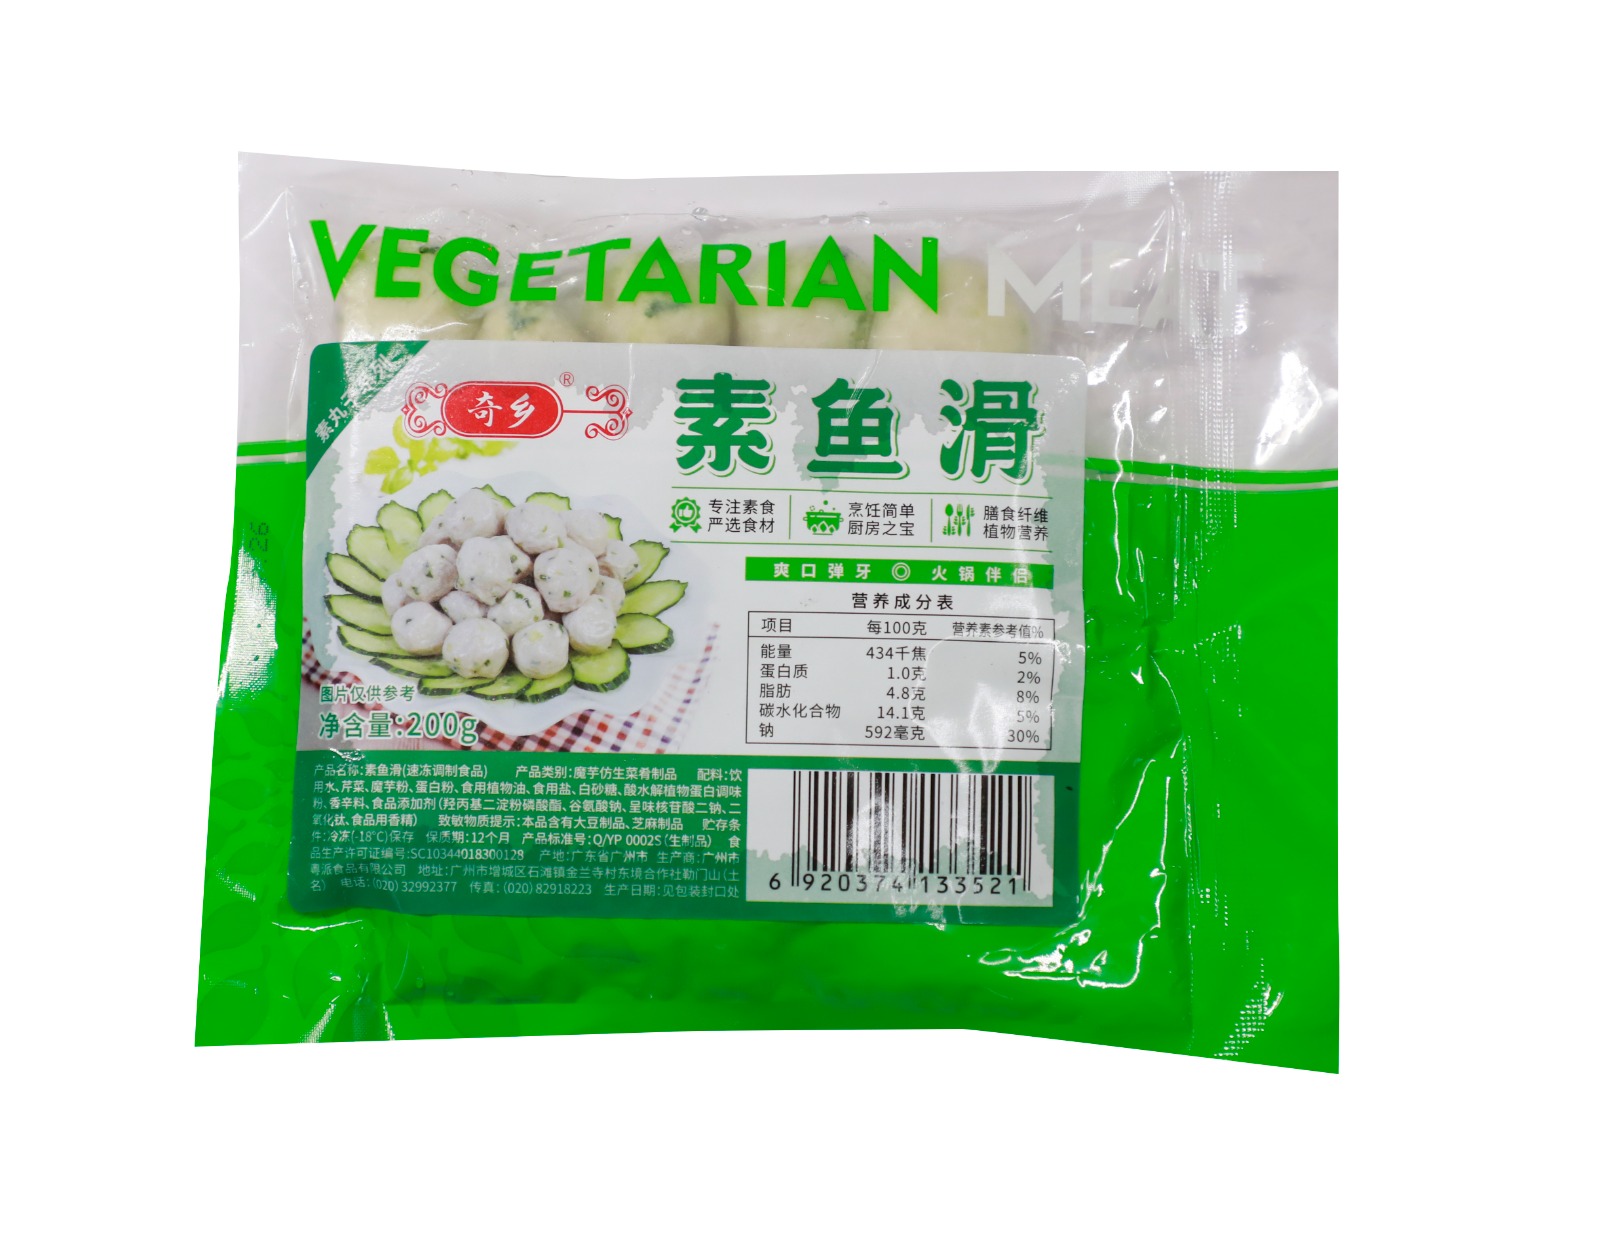 Image <a title="Qi Xiang Vegetarian Fish Balls yu hua 奇乡-素鱼滑 200 grams" href="https://friendlyvegetarian.com.sg/product/1896/qi-xiang-vegetarian-fish-balls-yu-hua-200-grams">Qi Xiang Vegetarian Fish Balls yu hua 奇乡-素鱼滑 200 grams</a>